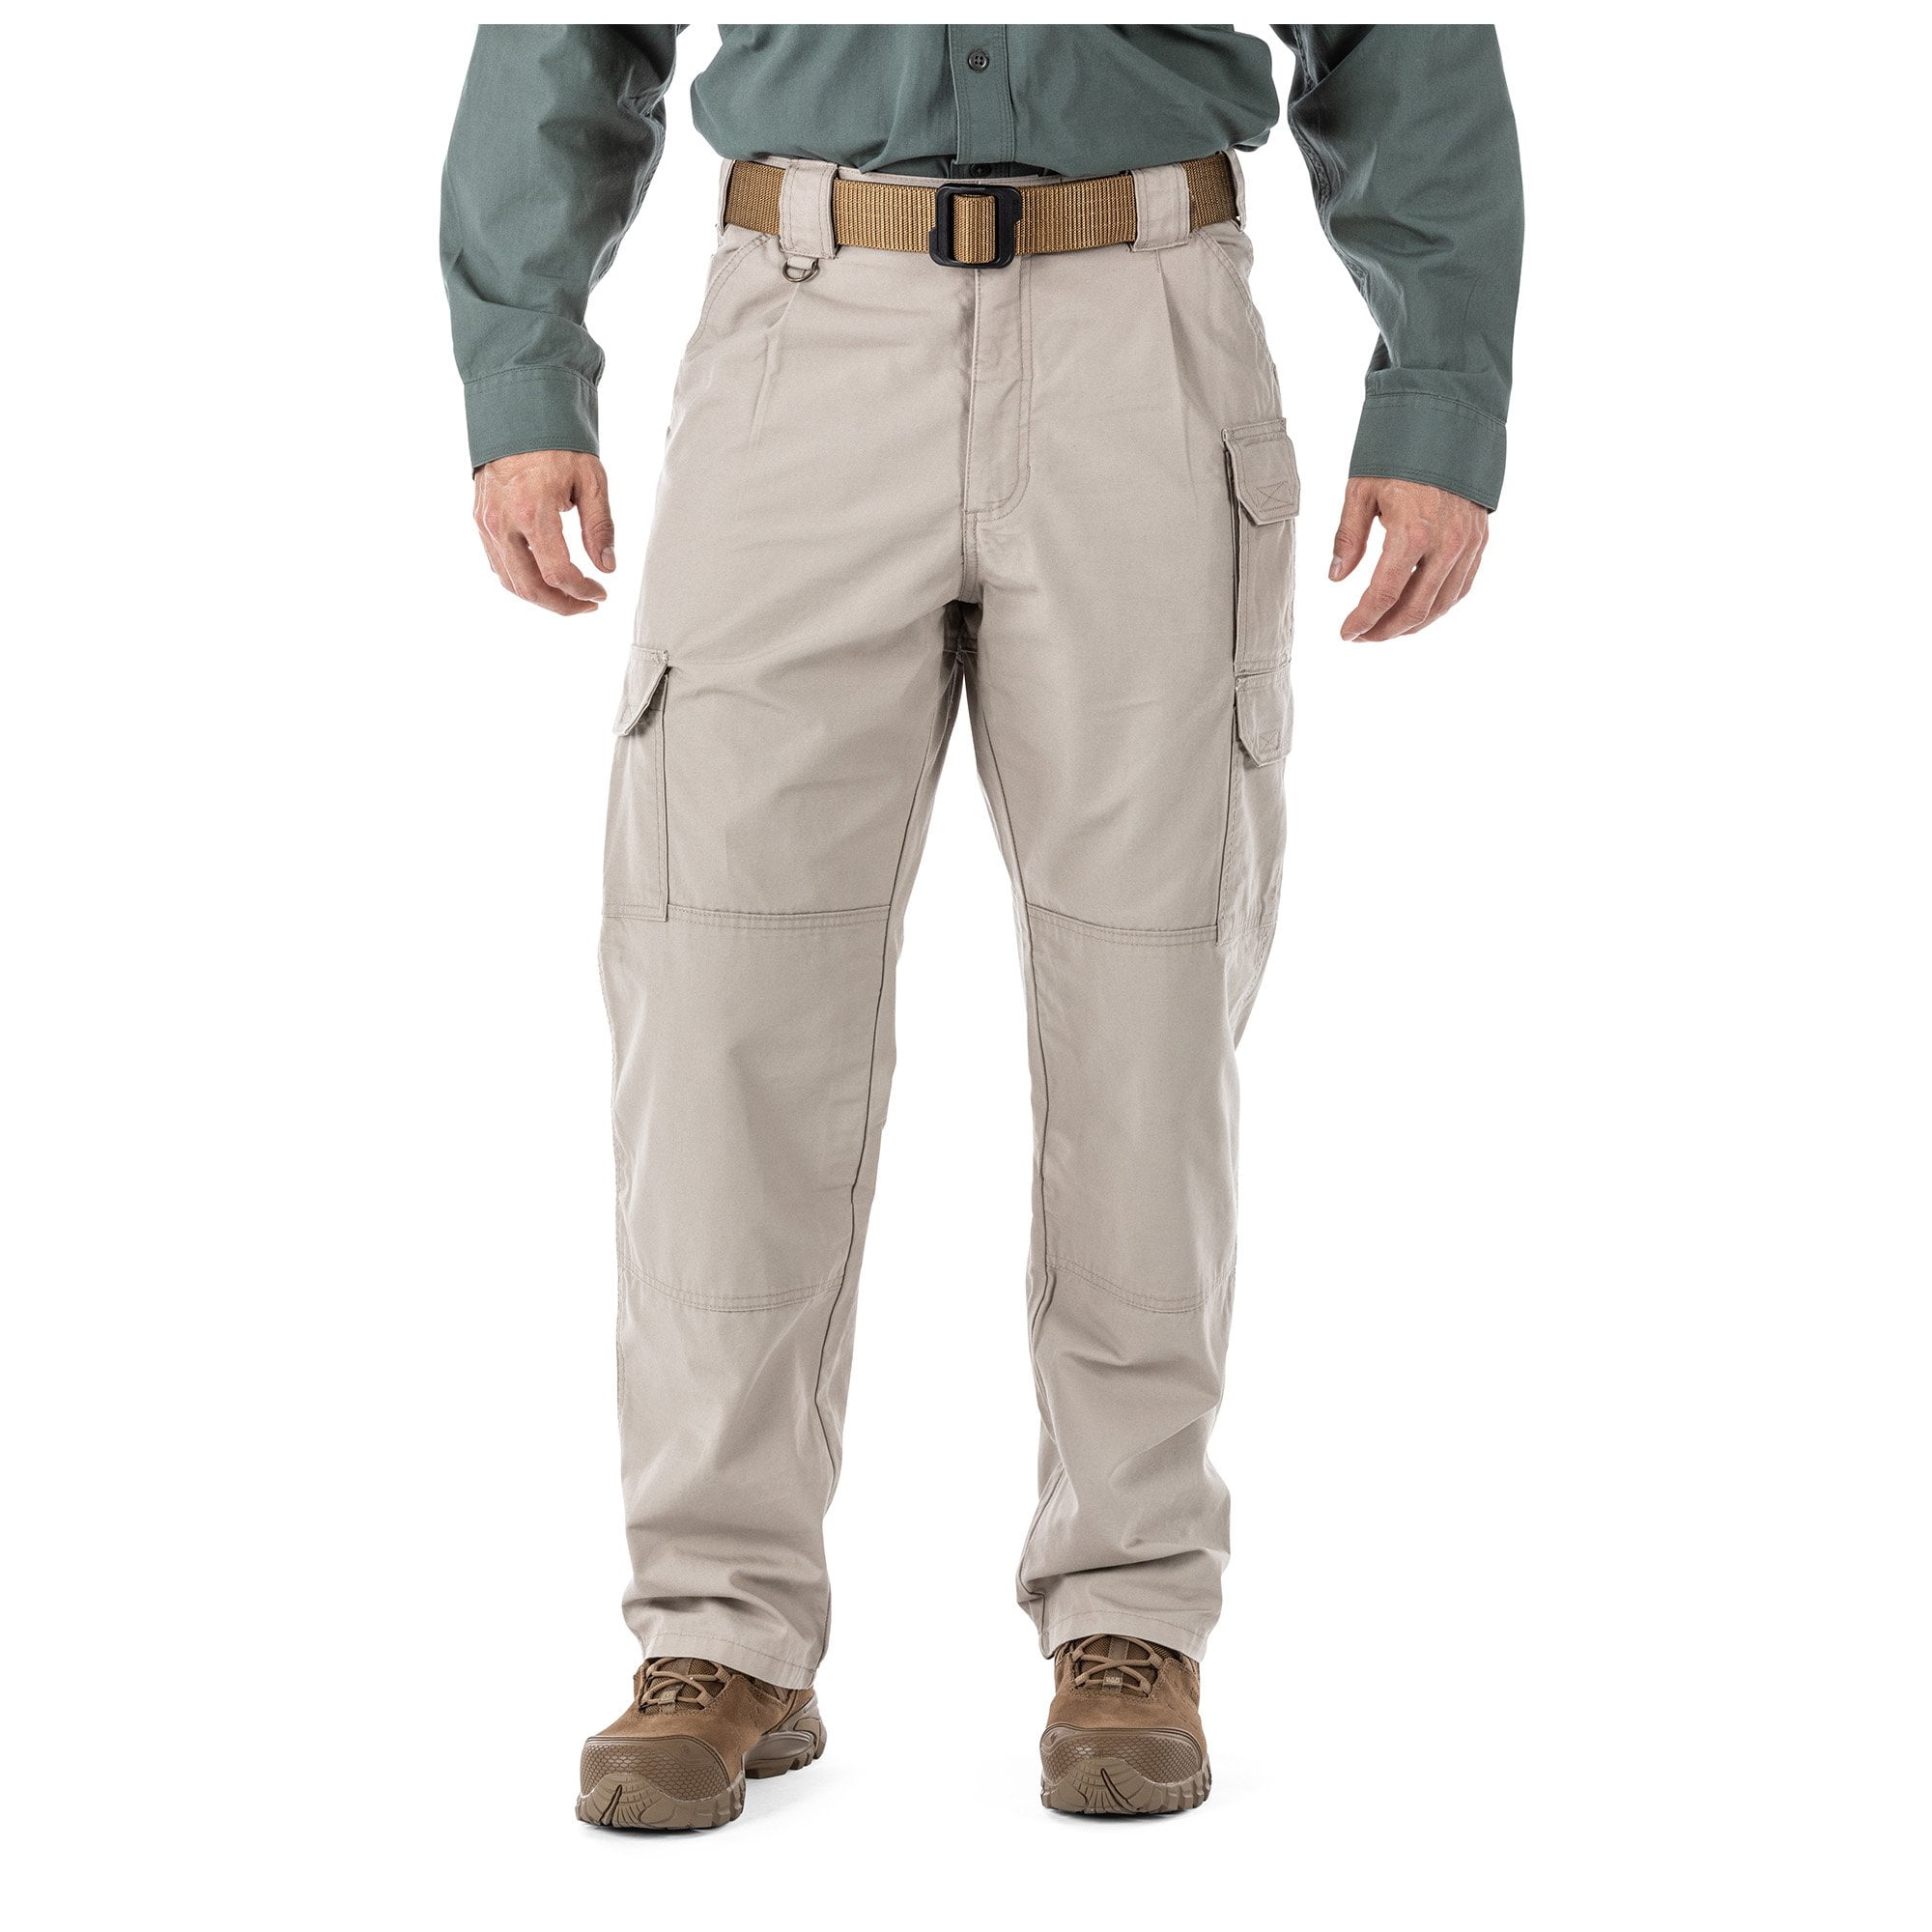 Superior Fit 5.11 Tactical Men's Active Work Pants 100% Cotton Style 74251 Double Reinforced 